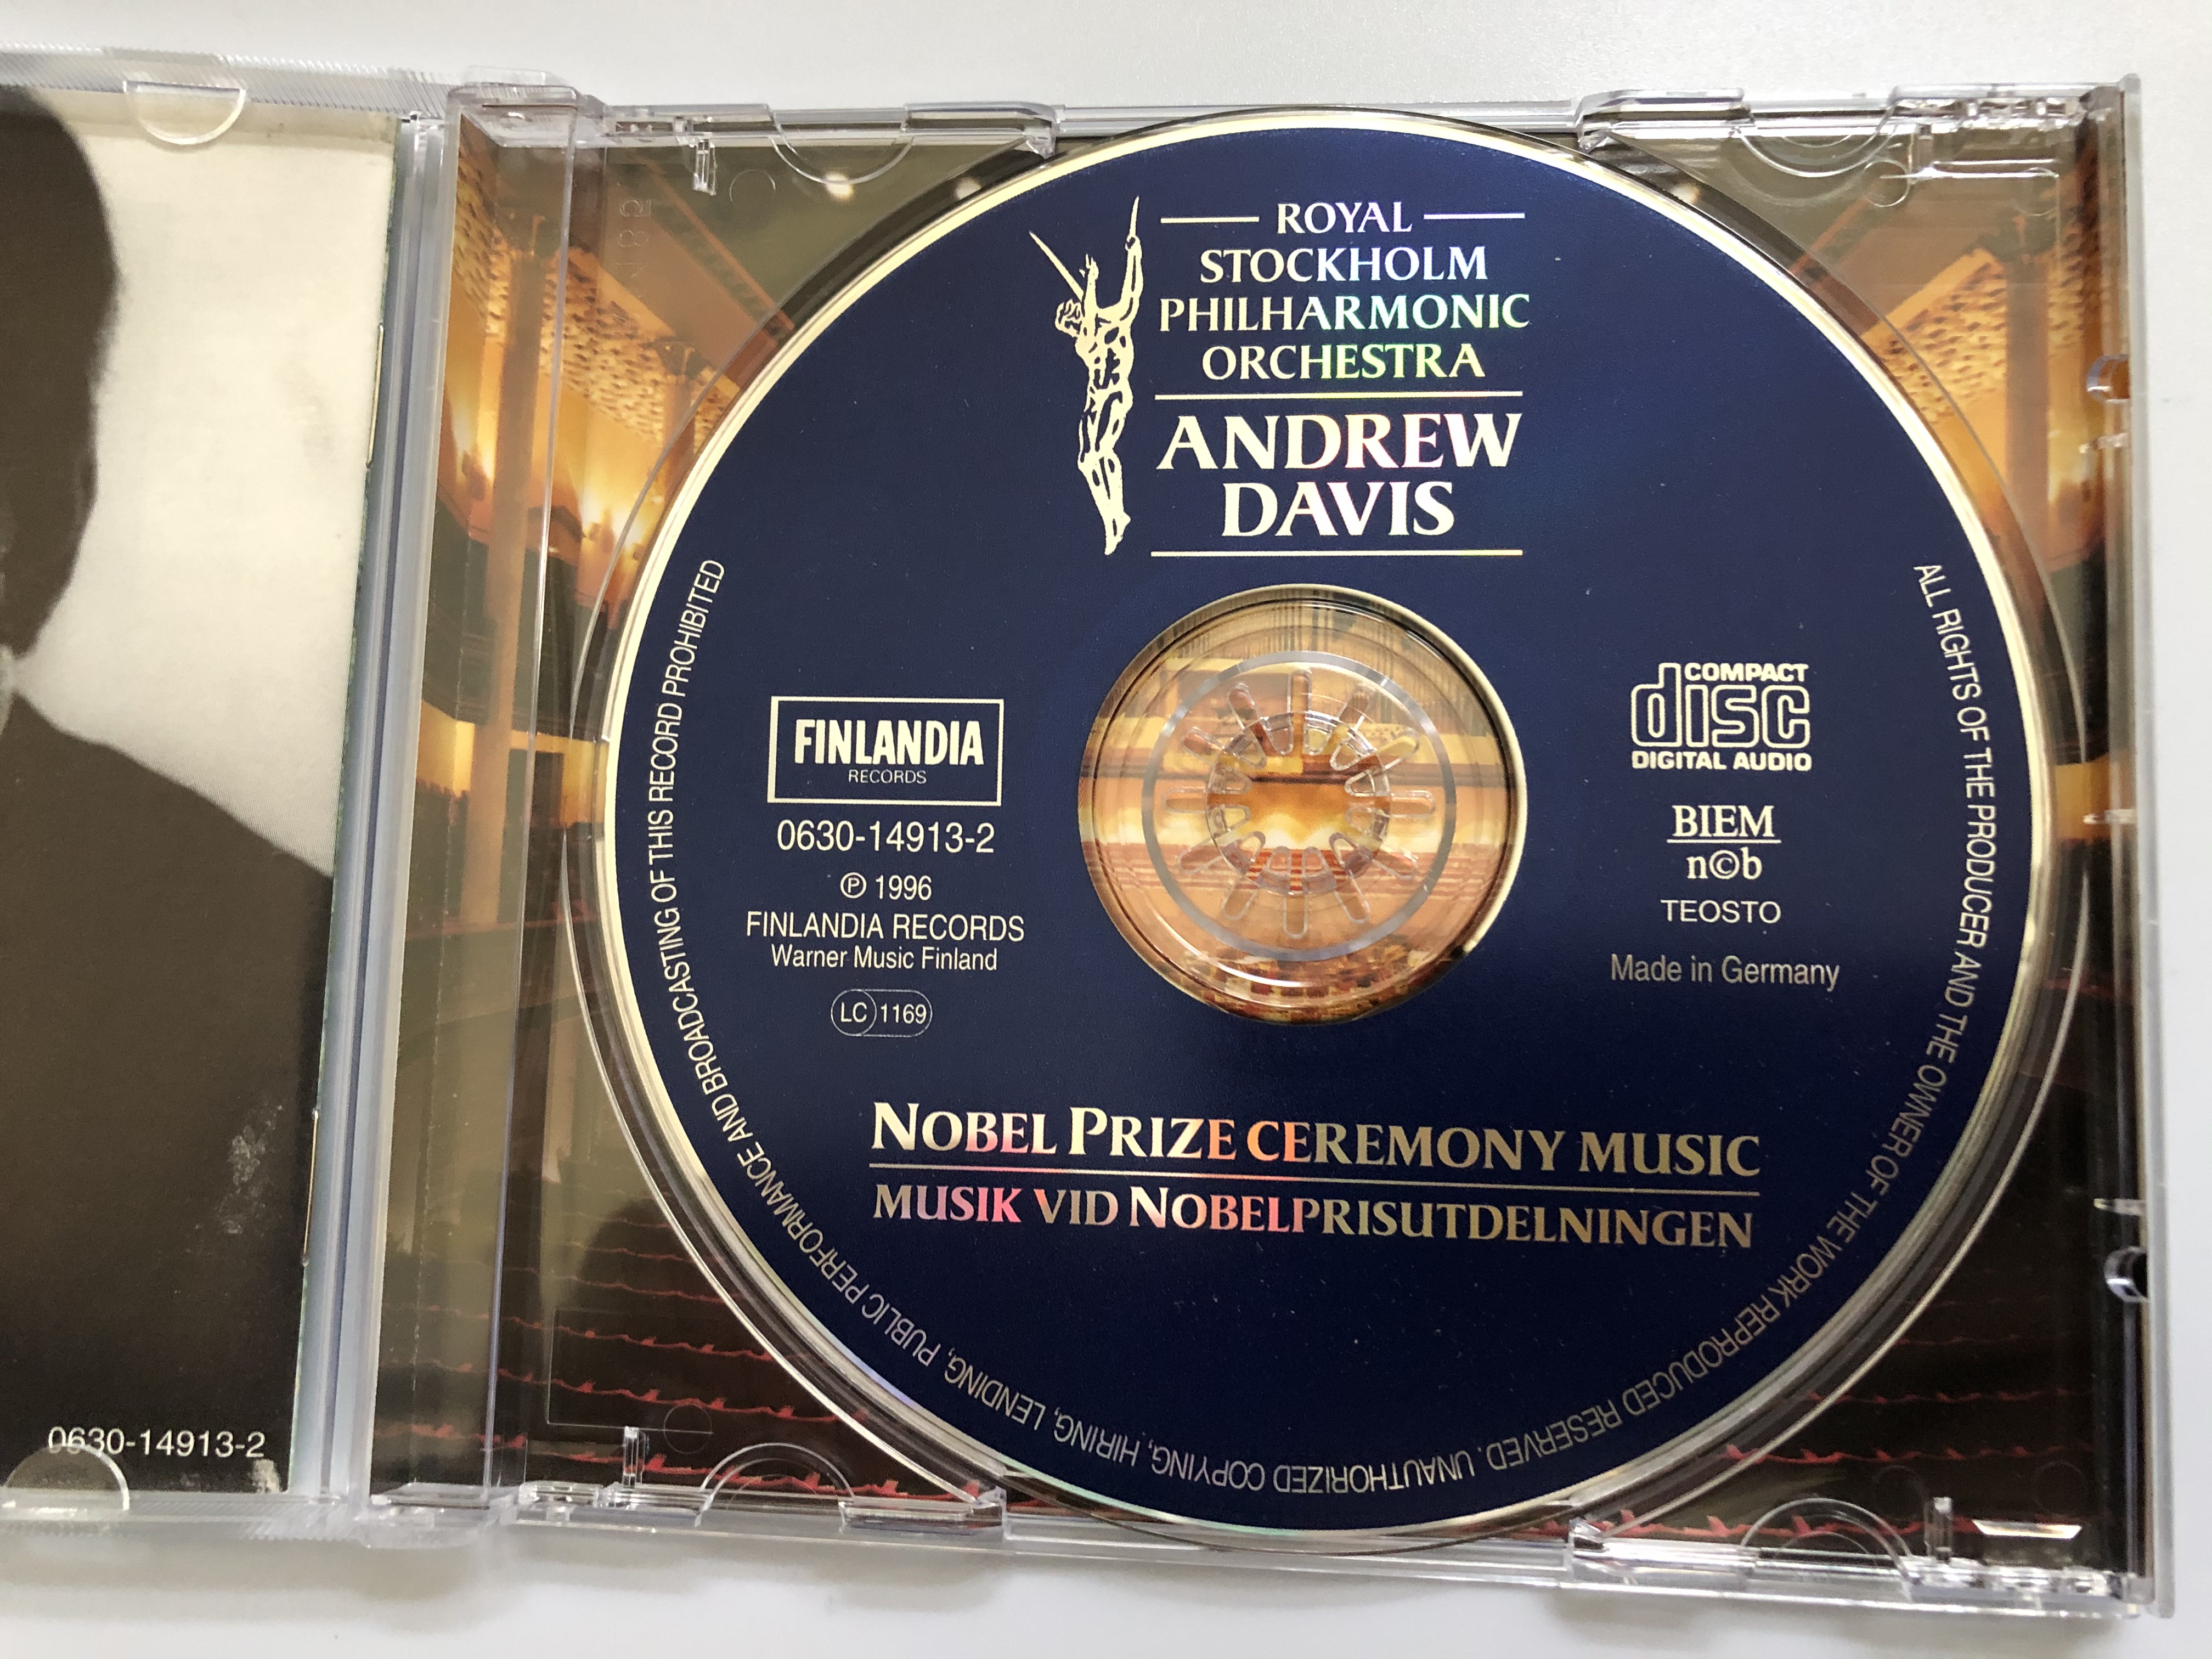 nobel-prize-ceremony-music-musik-vid-nobelprisutdelningen-royal-stockholm-philharmonic-orchestra-andrew-davis-finlandia-records-audio-cd-1996-stereo-0630-14913-2-7-.jpg